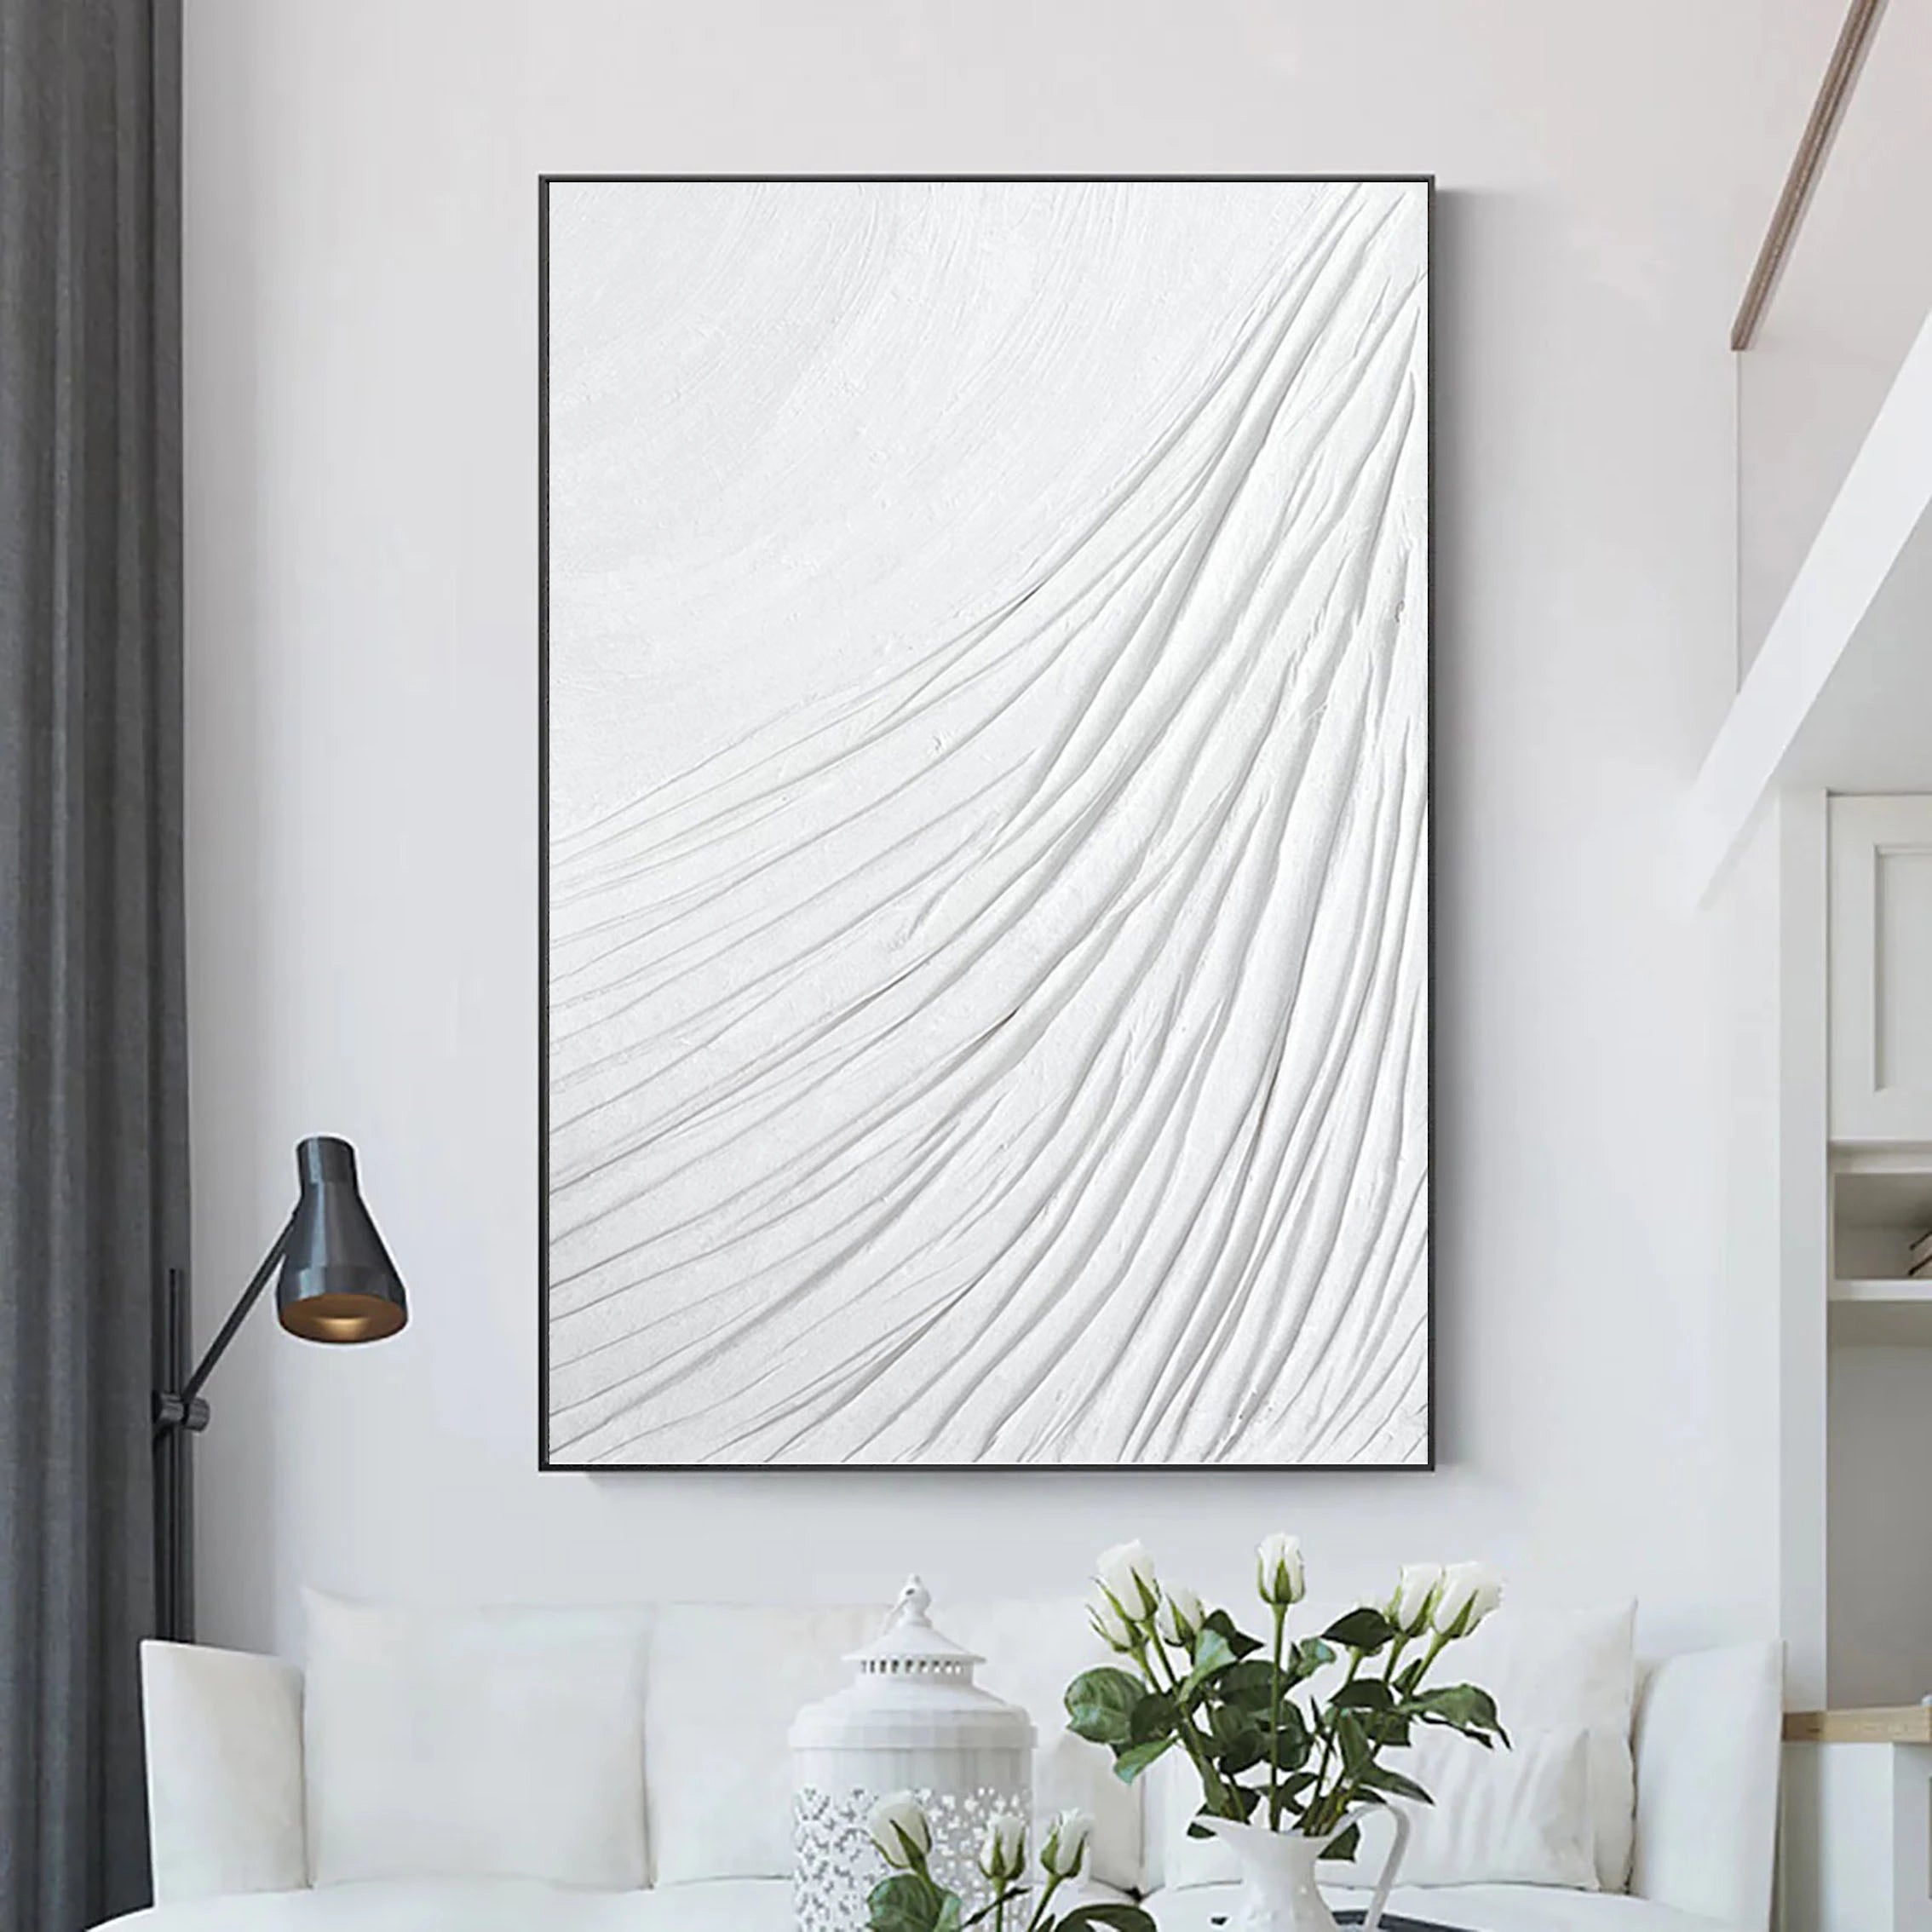 White 3D Textured Plaster Art Large Painting on Canvas Minimalistic Balance